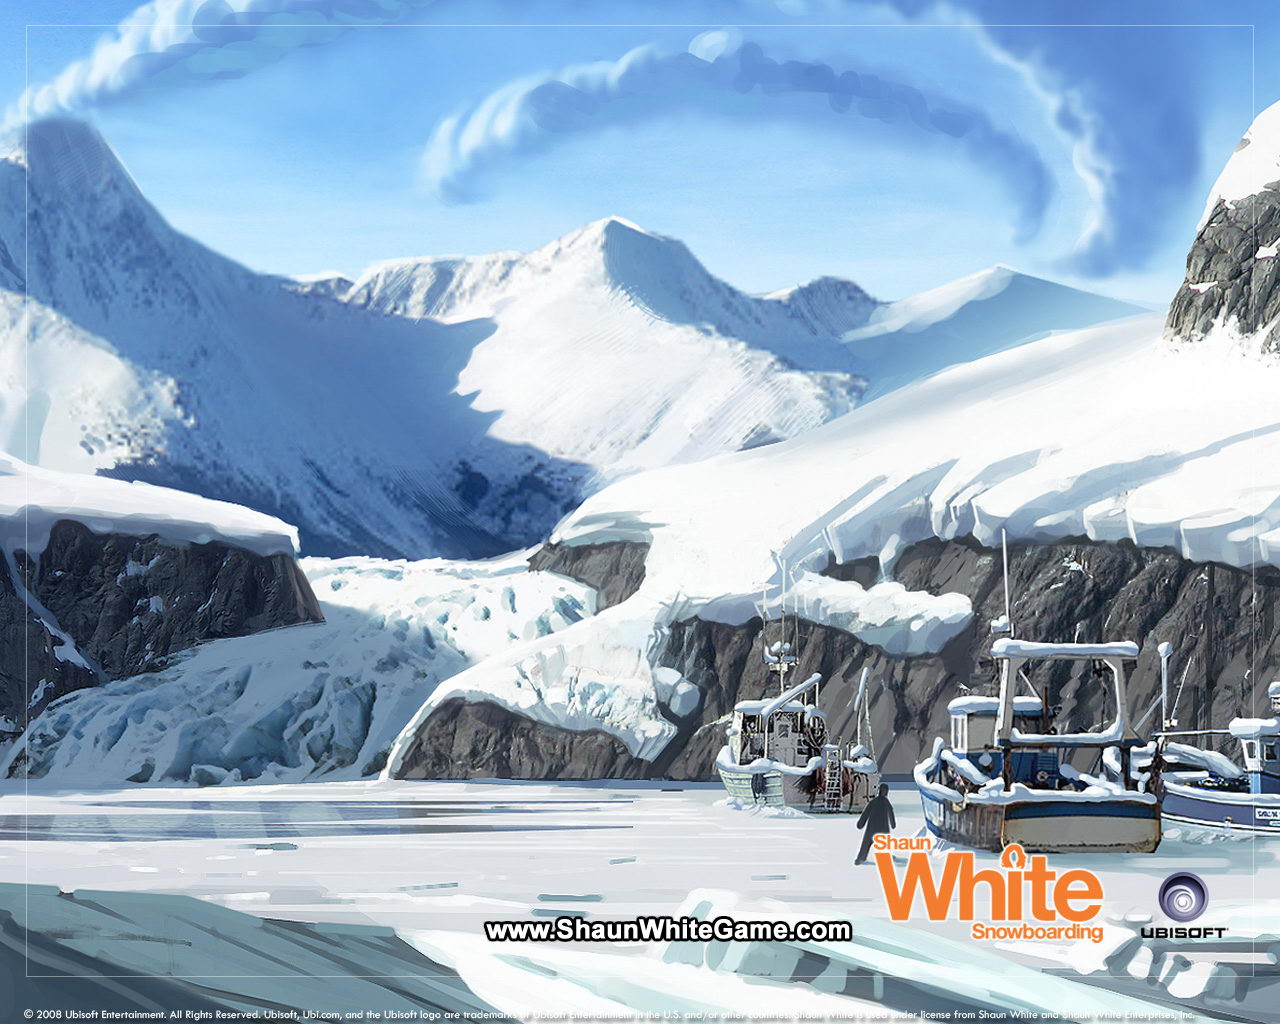 Shaun White Snowboarding Hill Mountain Peaks